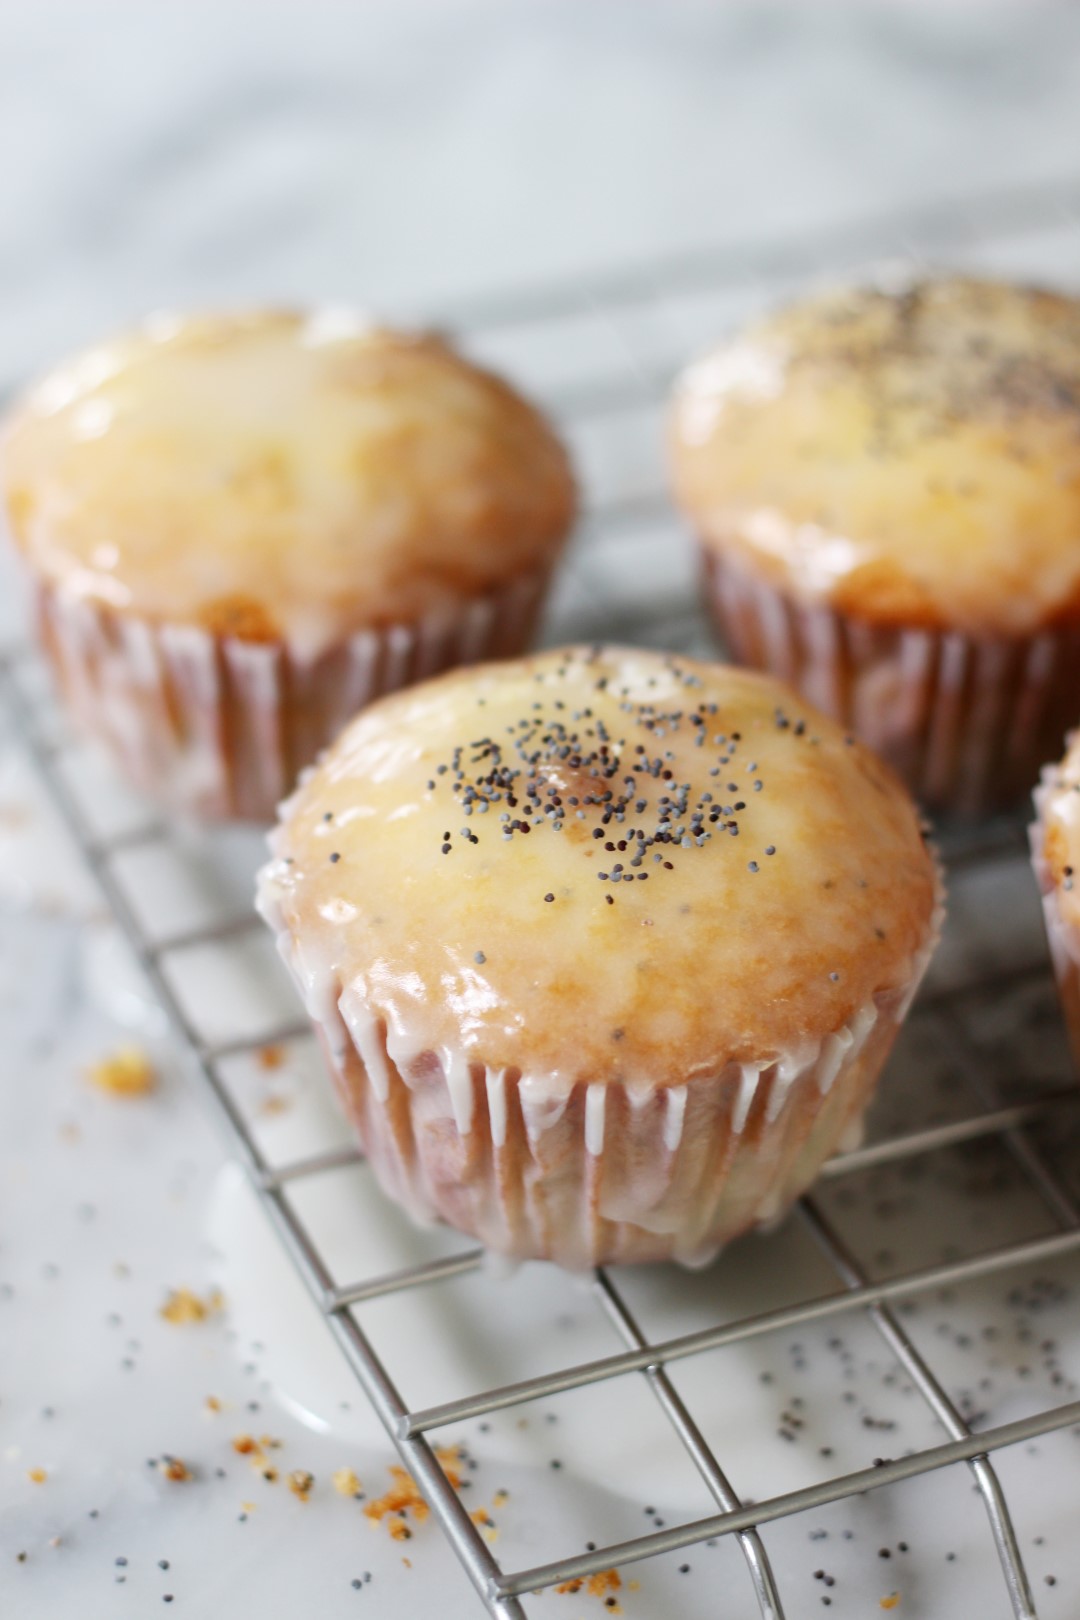 muffins de limón sin gluten, recetas aptas para celíacos, recetas sin tacc, sin trigo, gluten free.